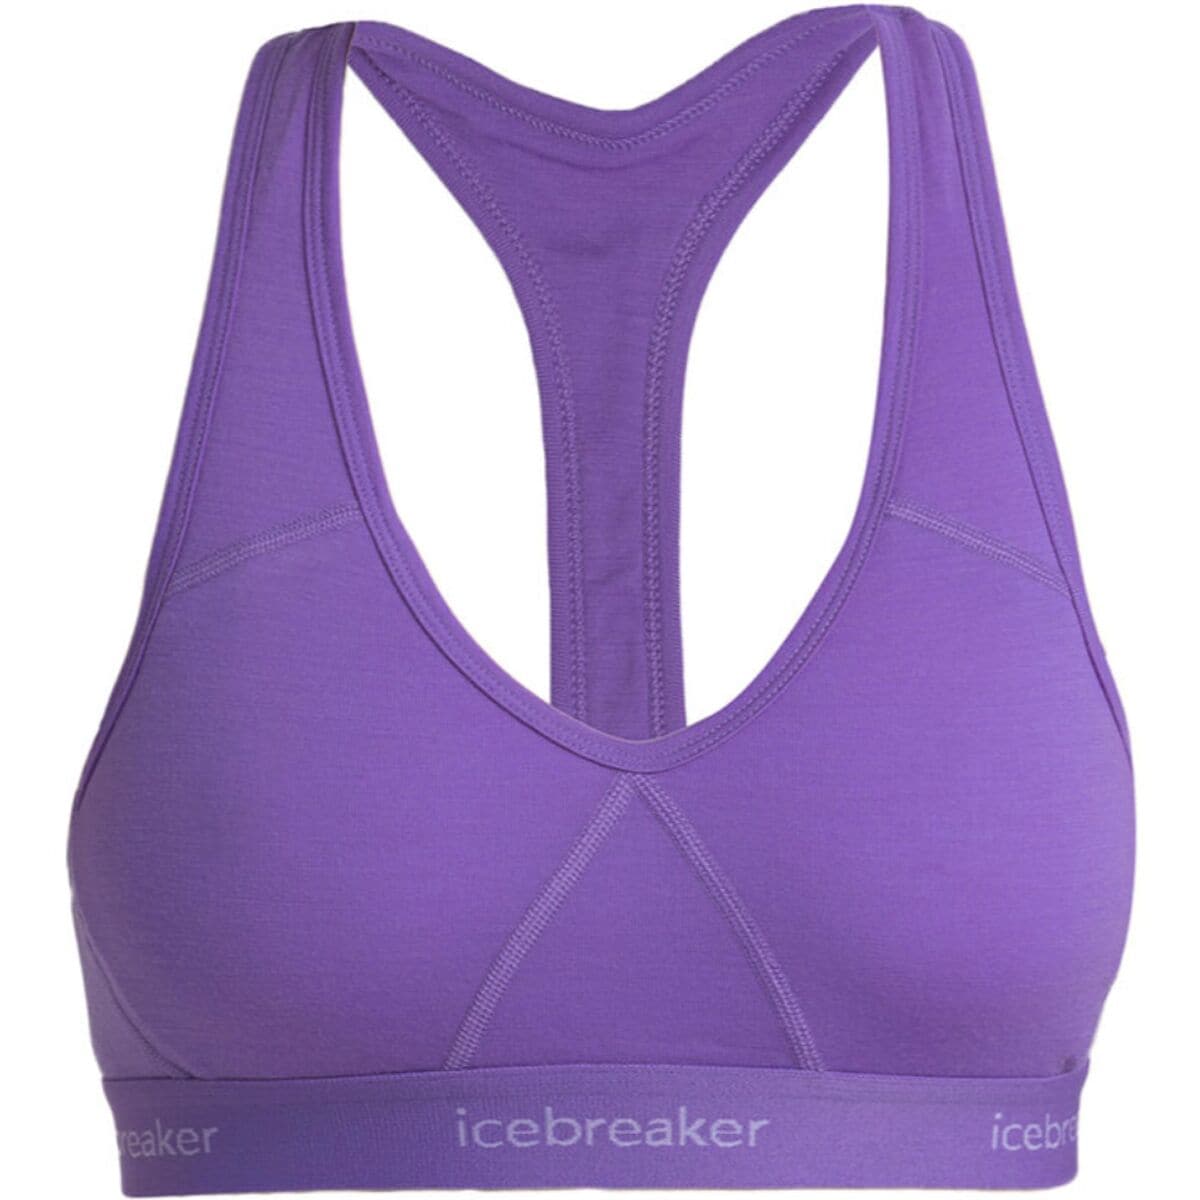 Icebreaker Sprite Racerback Bra - Women's - Clothing